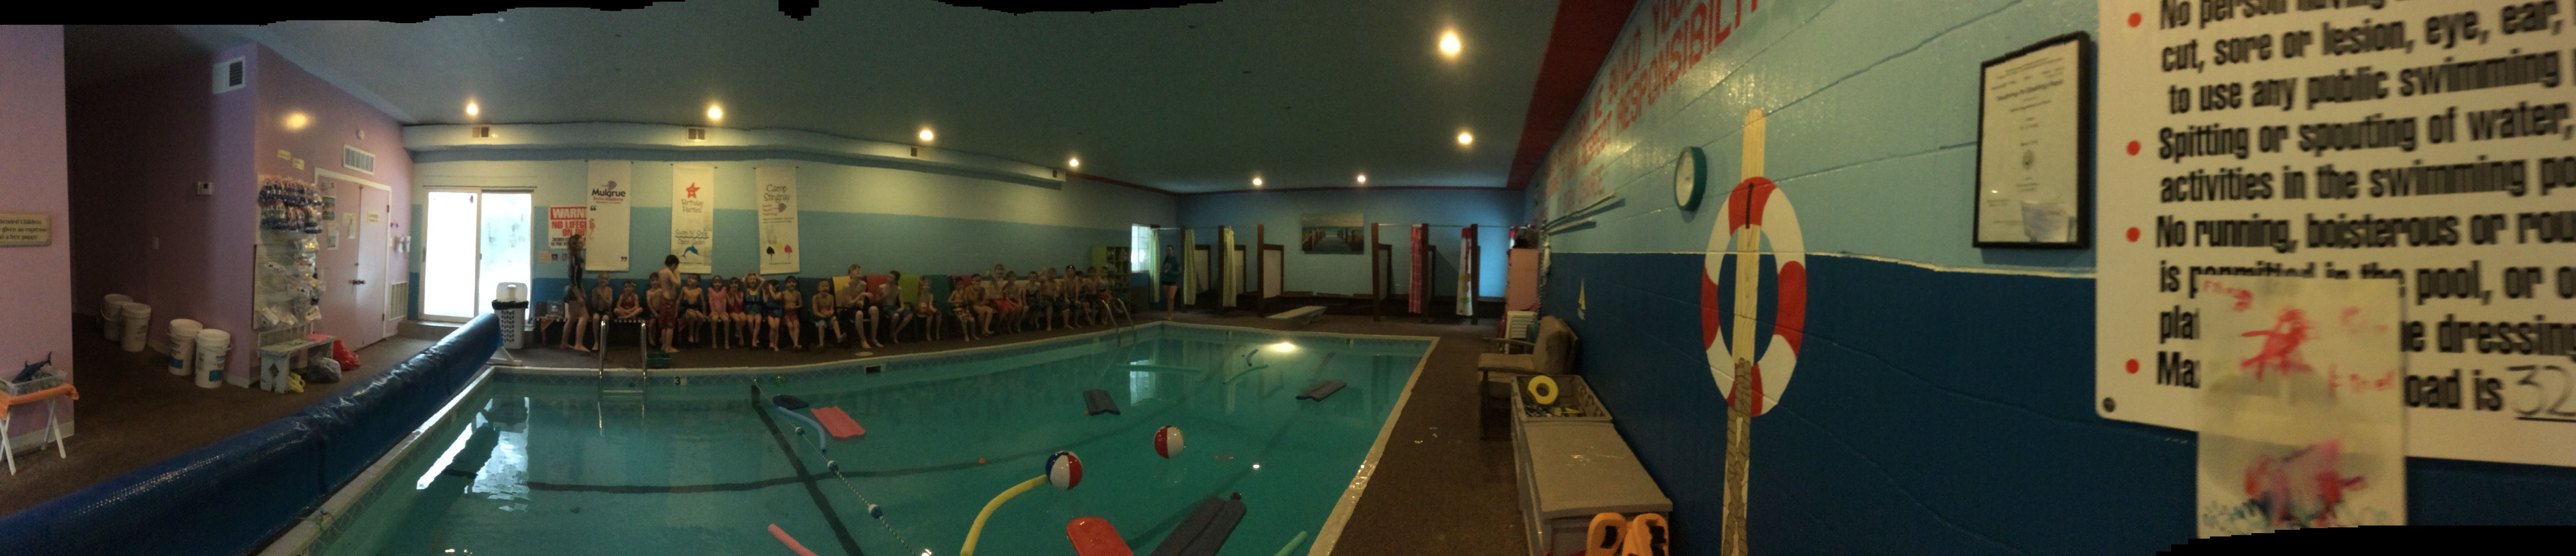 Facility : About : Rhonda's Swim Academy